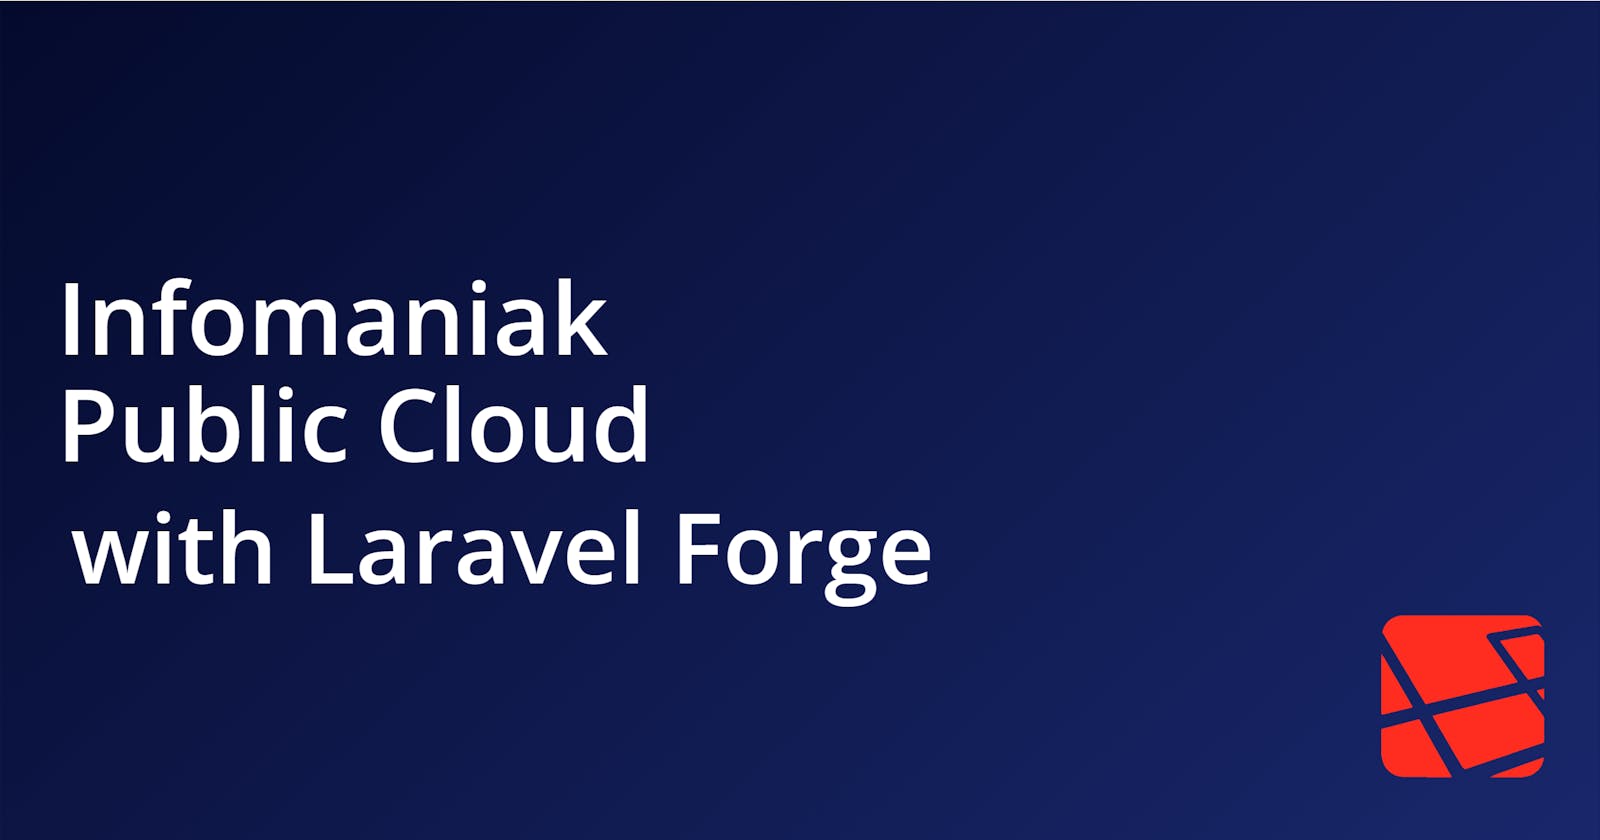 Enjoy Infomaniak IaaS Public Cloud with Laravel Forge